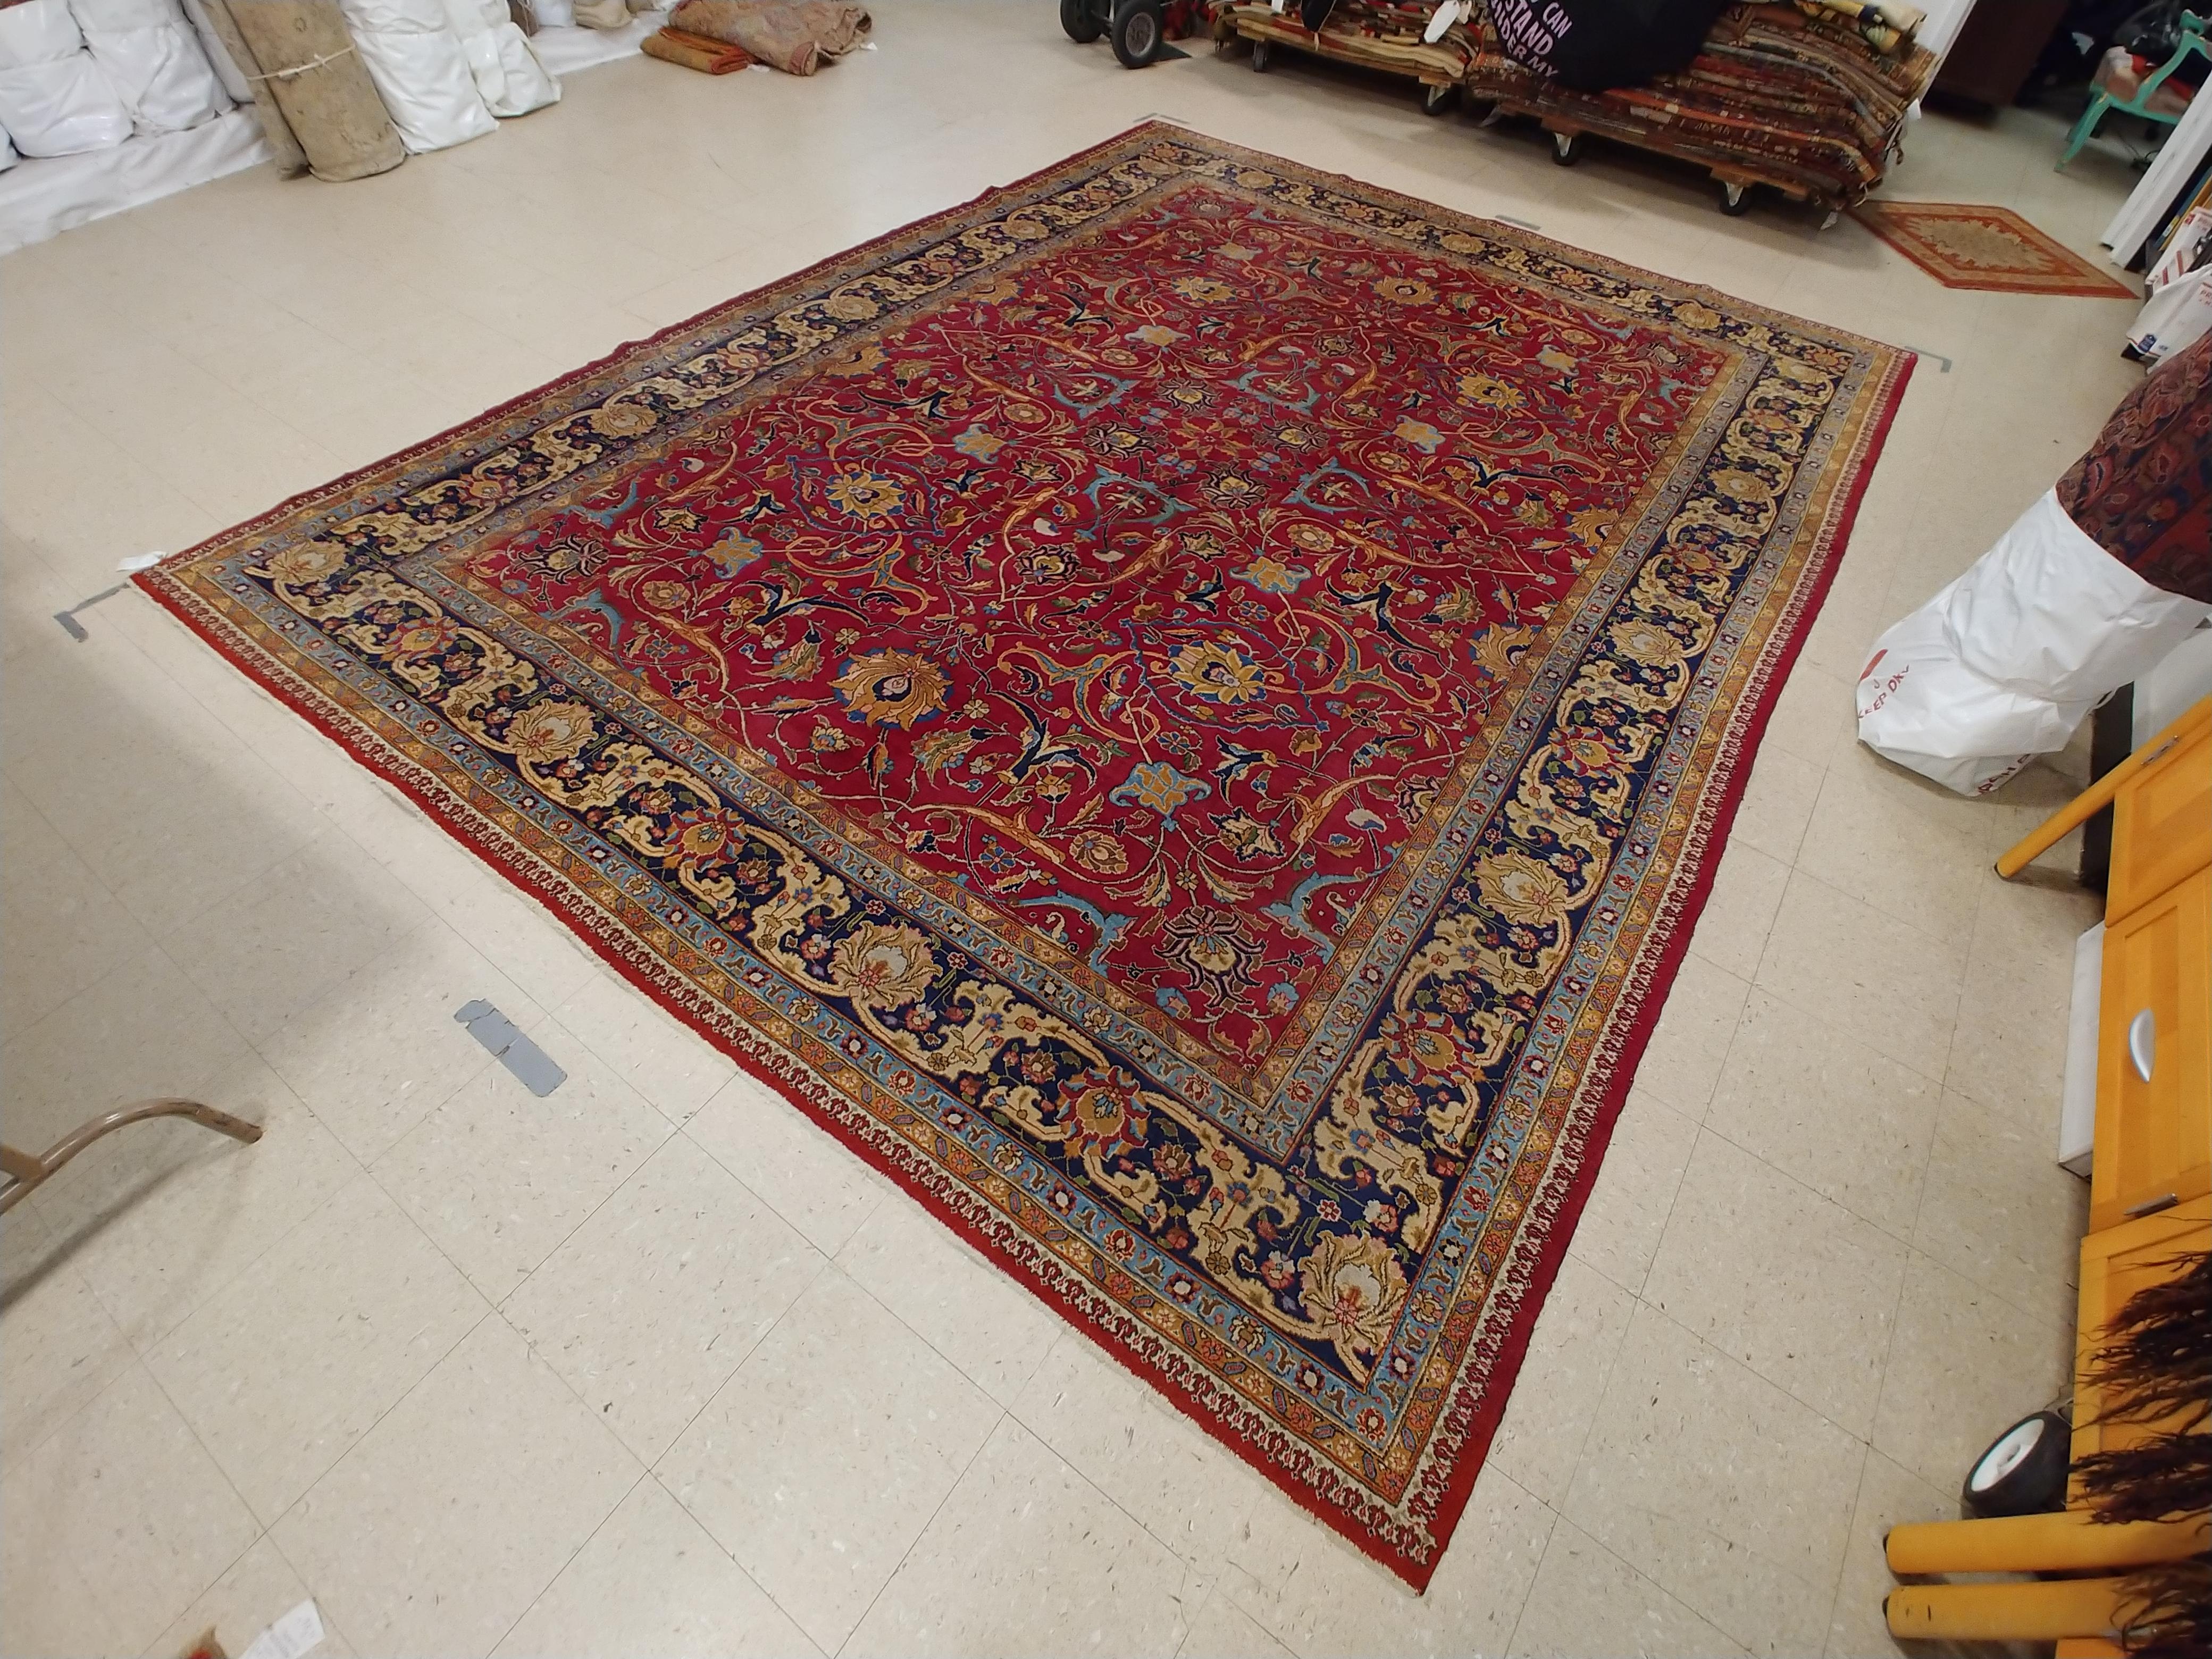 Wool Antique Tabriz Persian Carpet, Handmade Oriental Rug, Red, Caramel, Light Blue